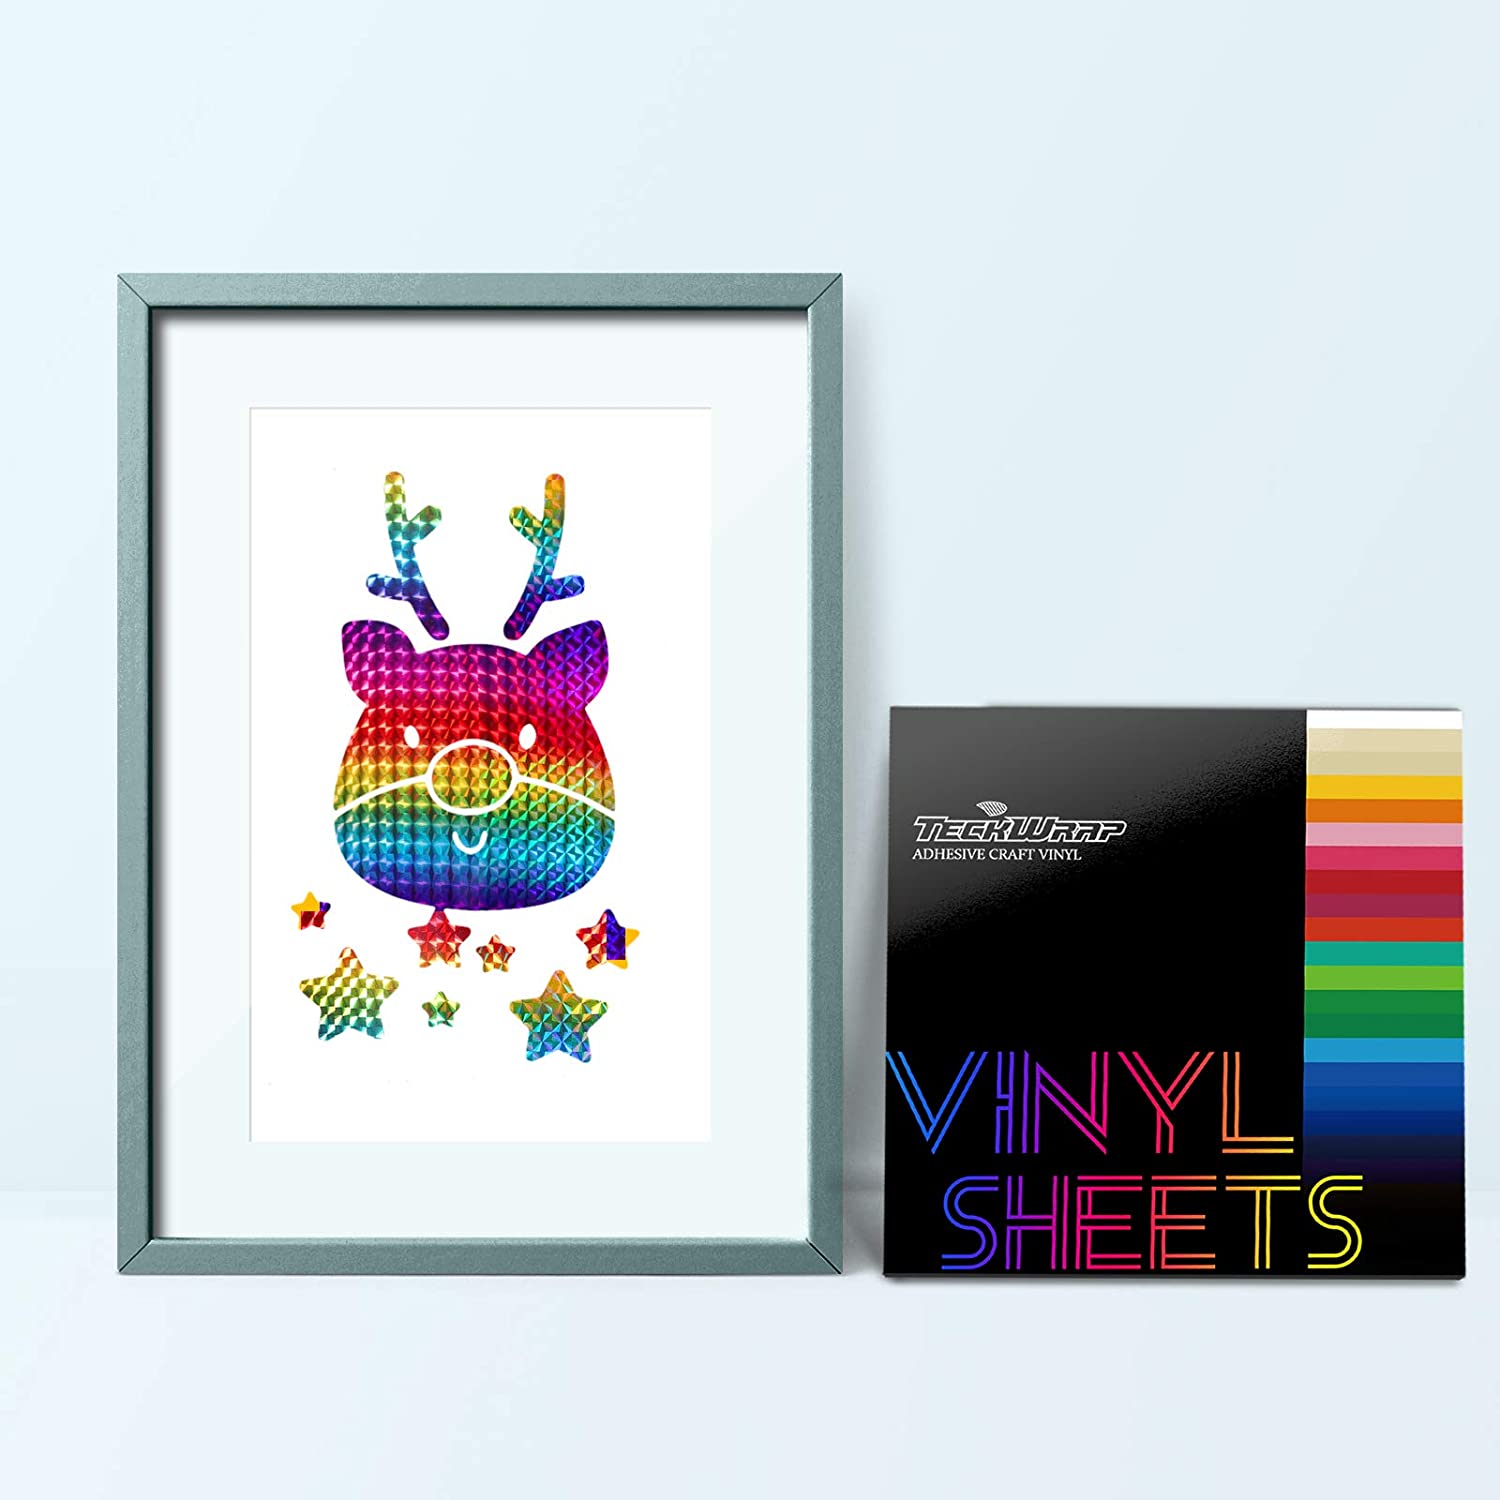 Multicolor Adhesive Craft Permanent Vinyl Roll Design Lettering